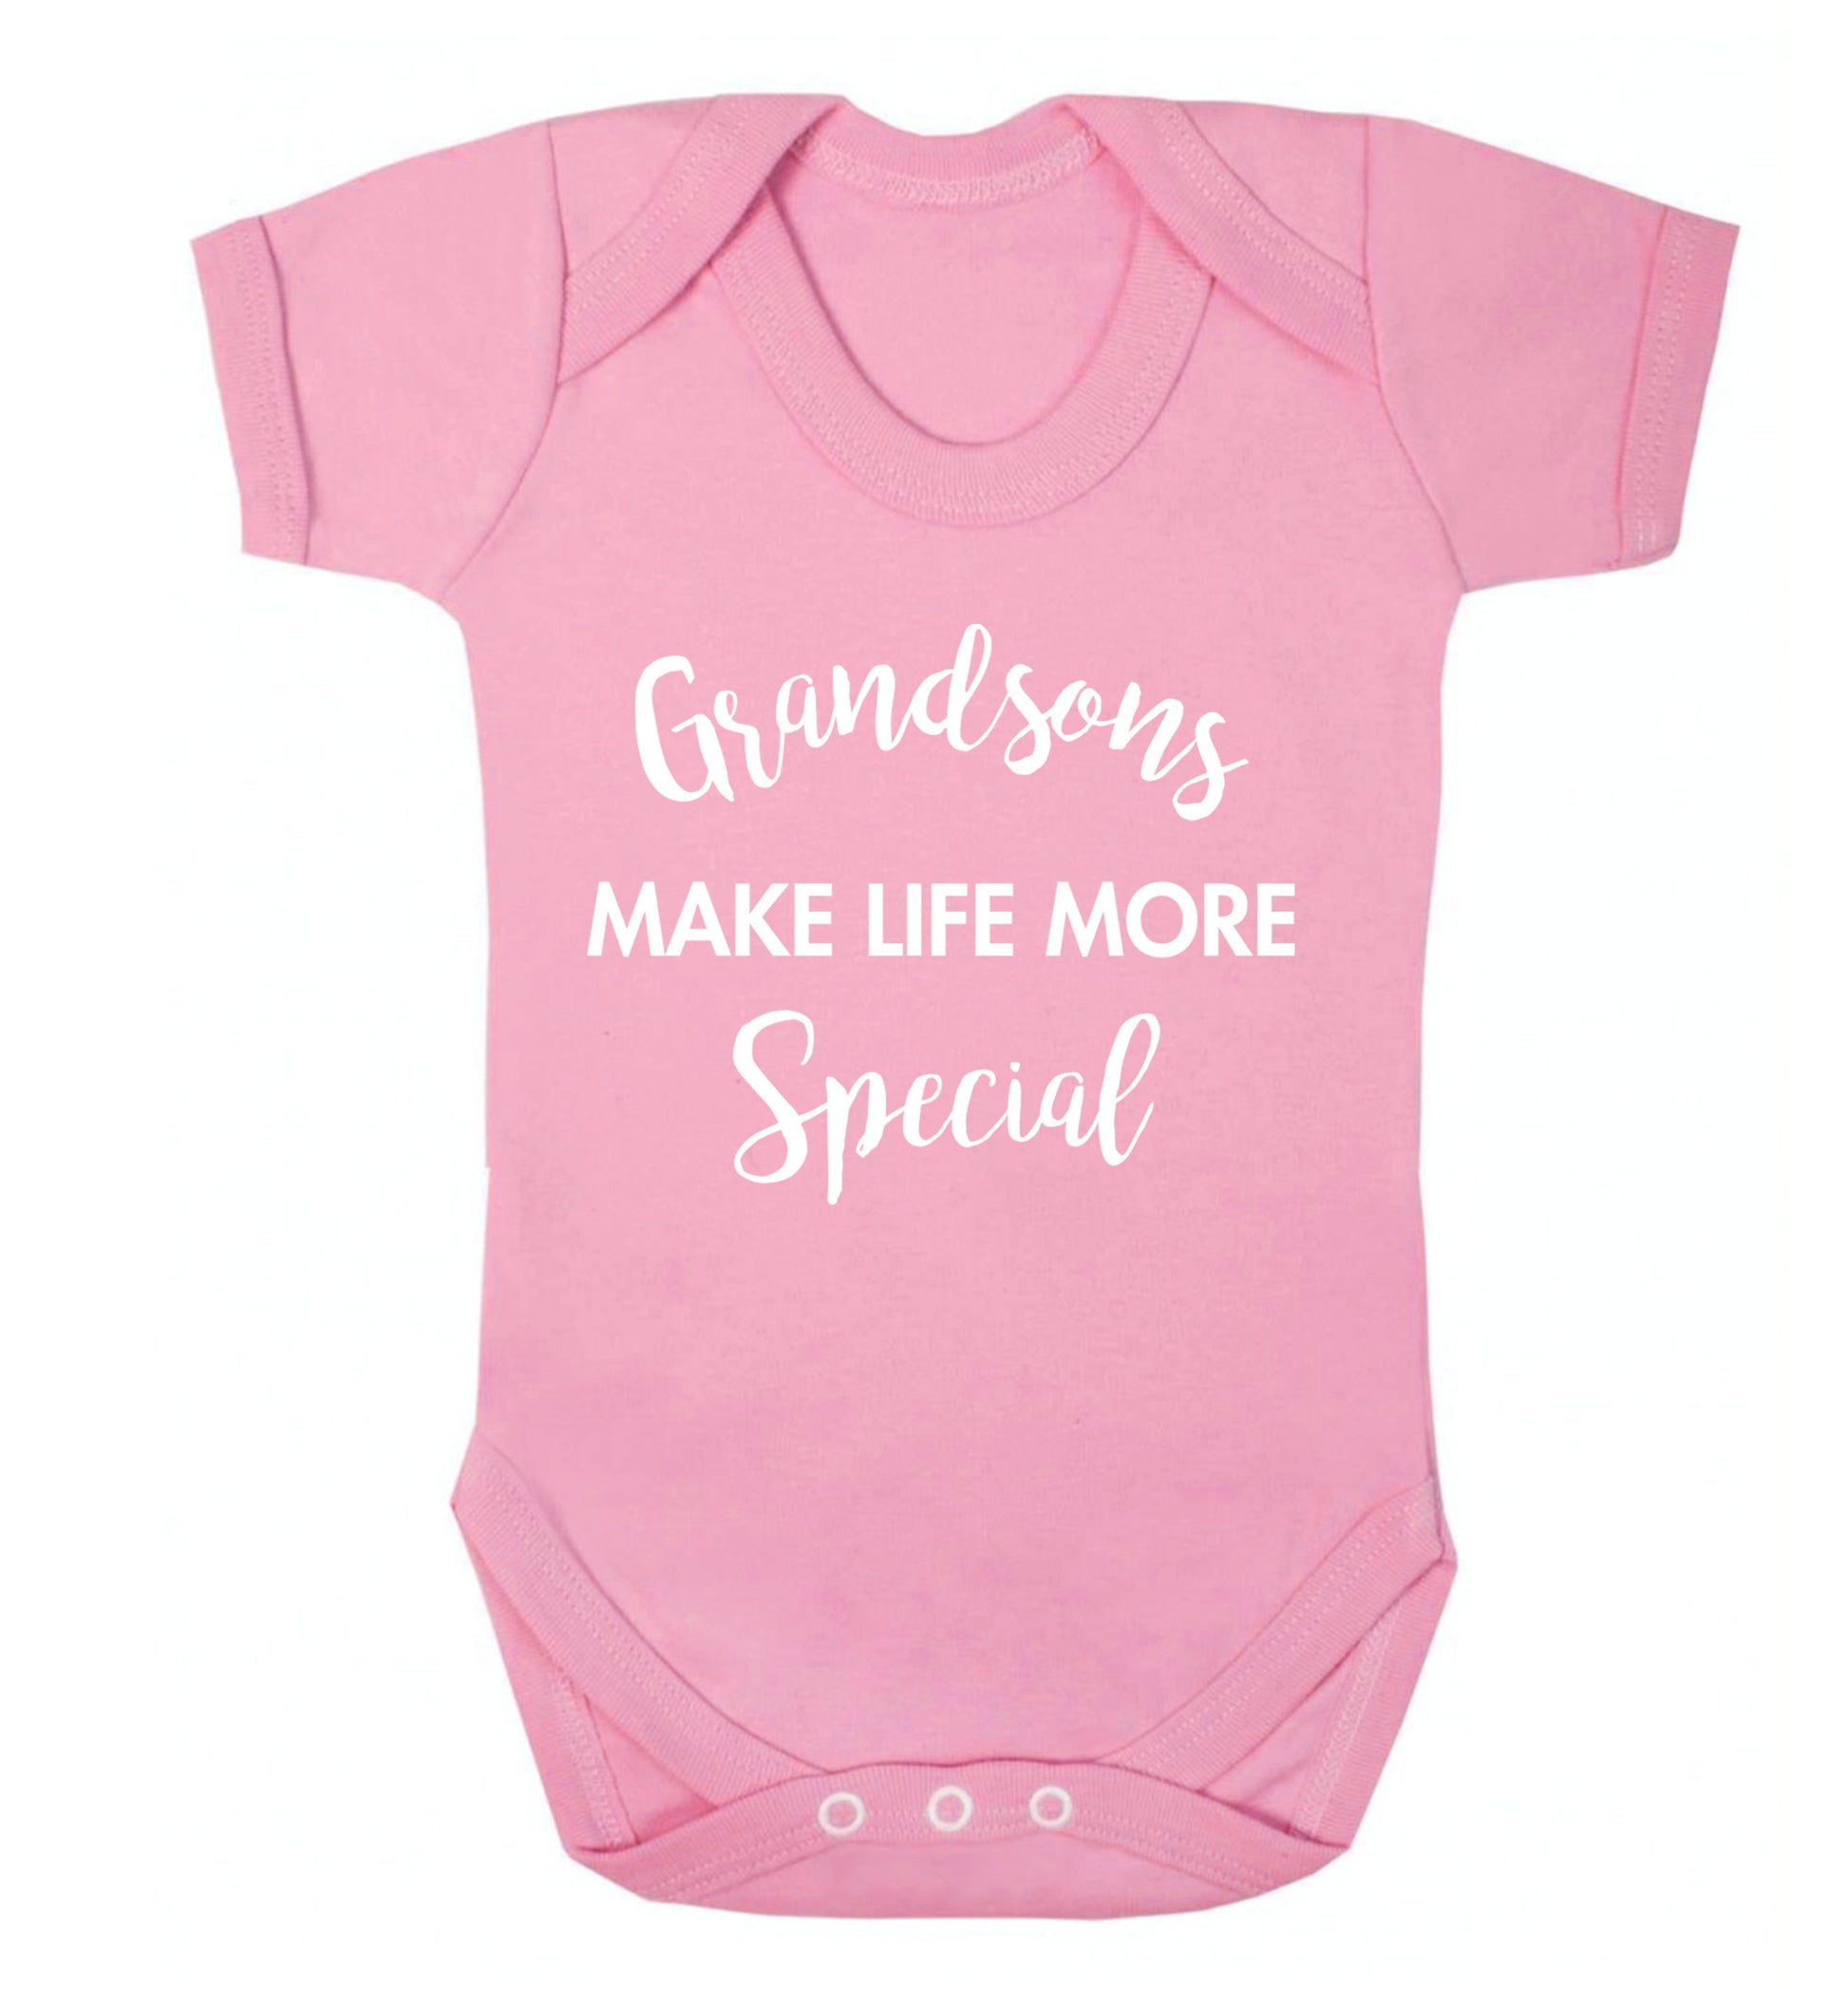 Grandsons make life more special Baby Vest pale pink 18-24 months